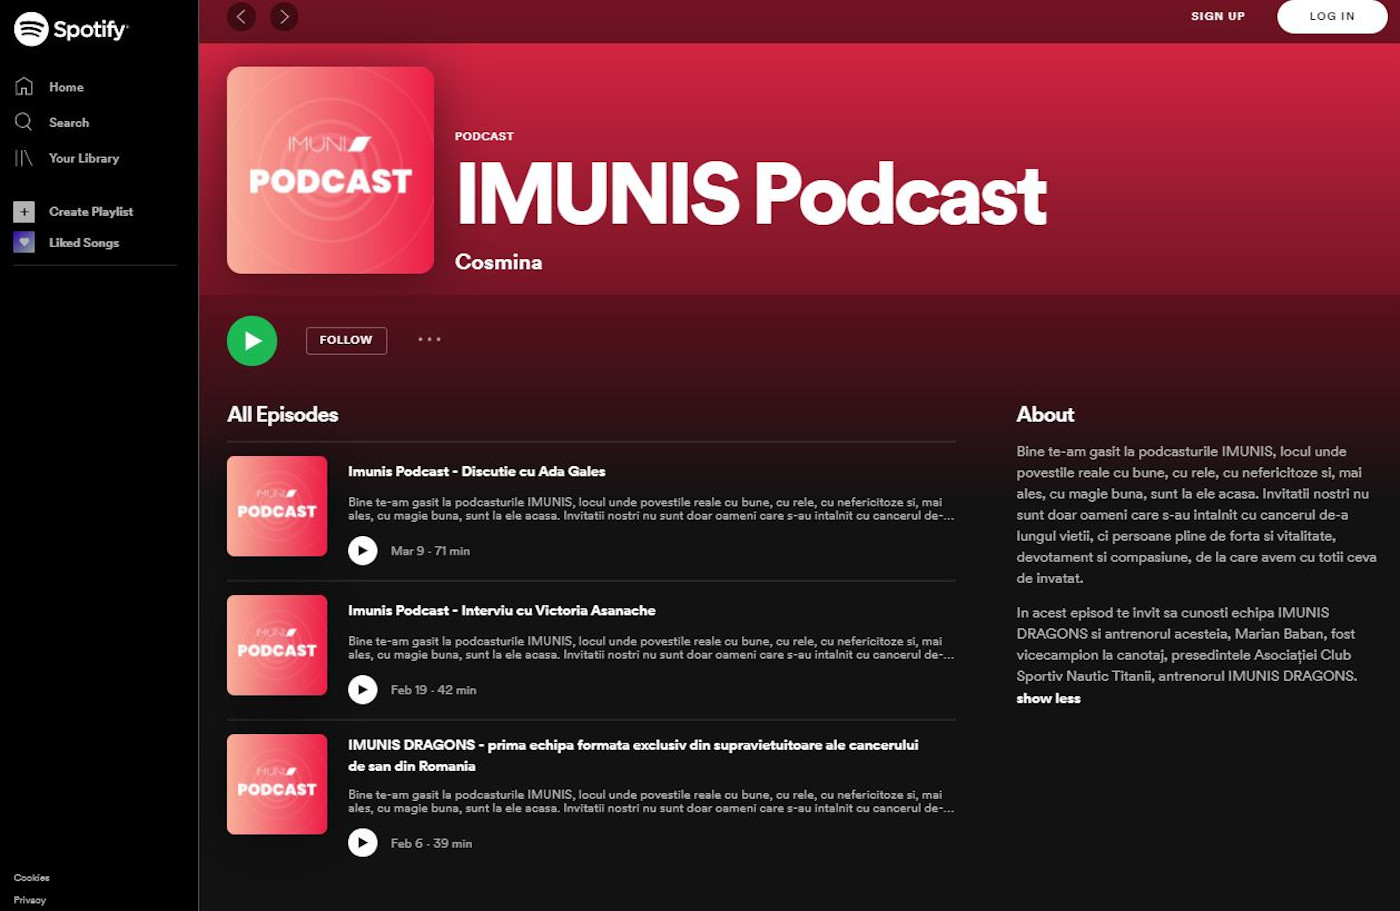 IMUNIS Podcast Spotify playlist